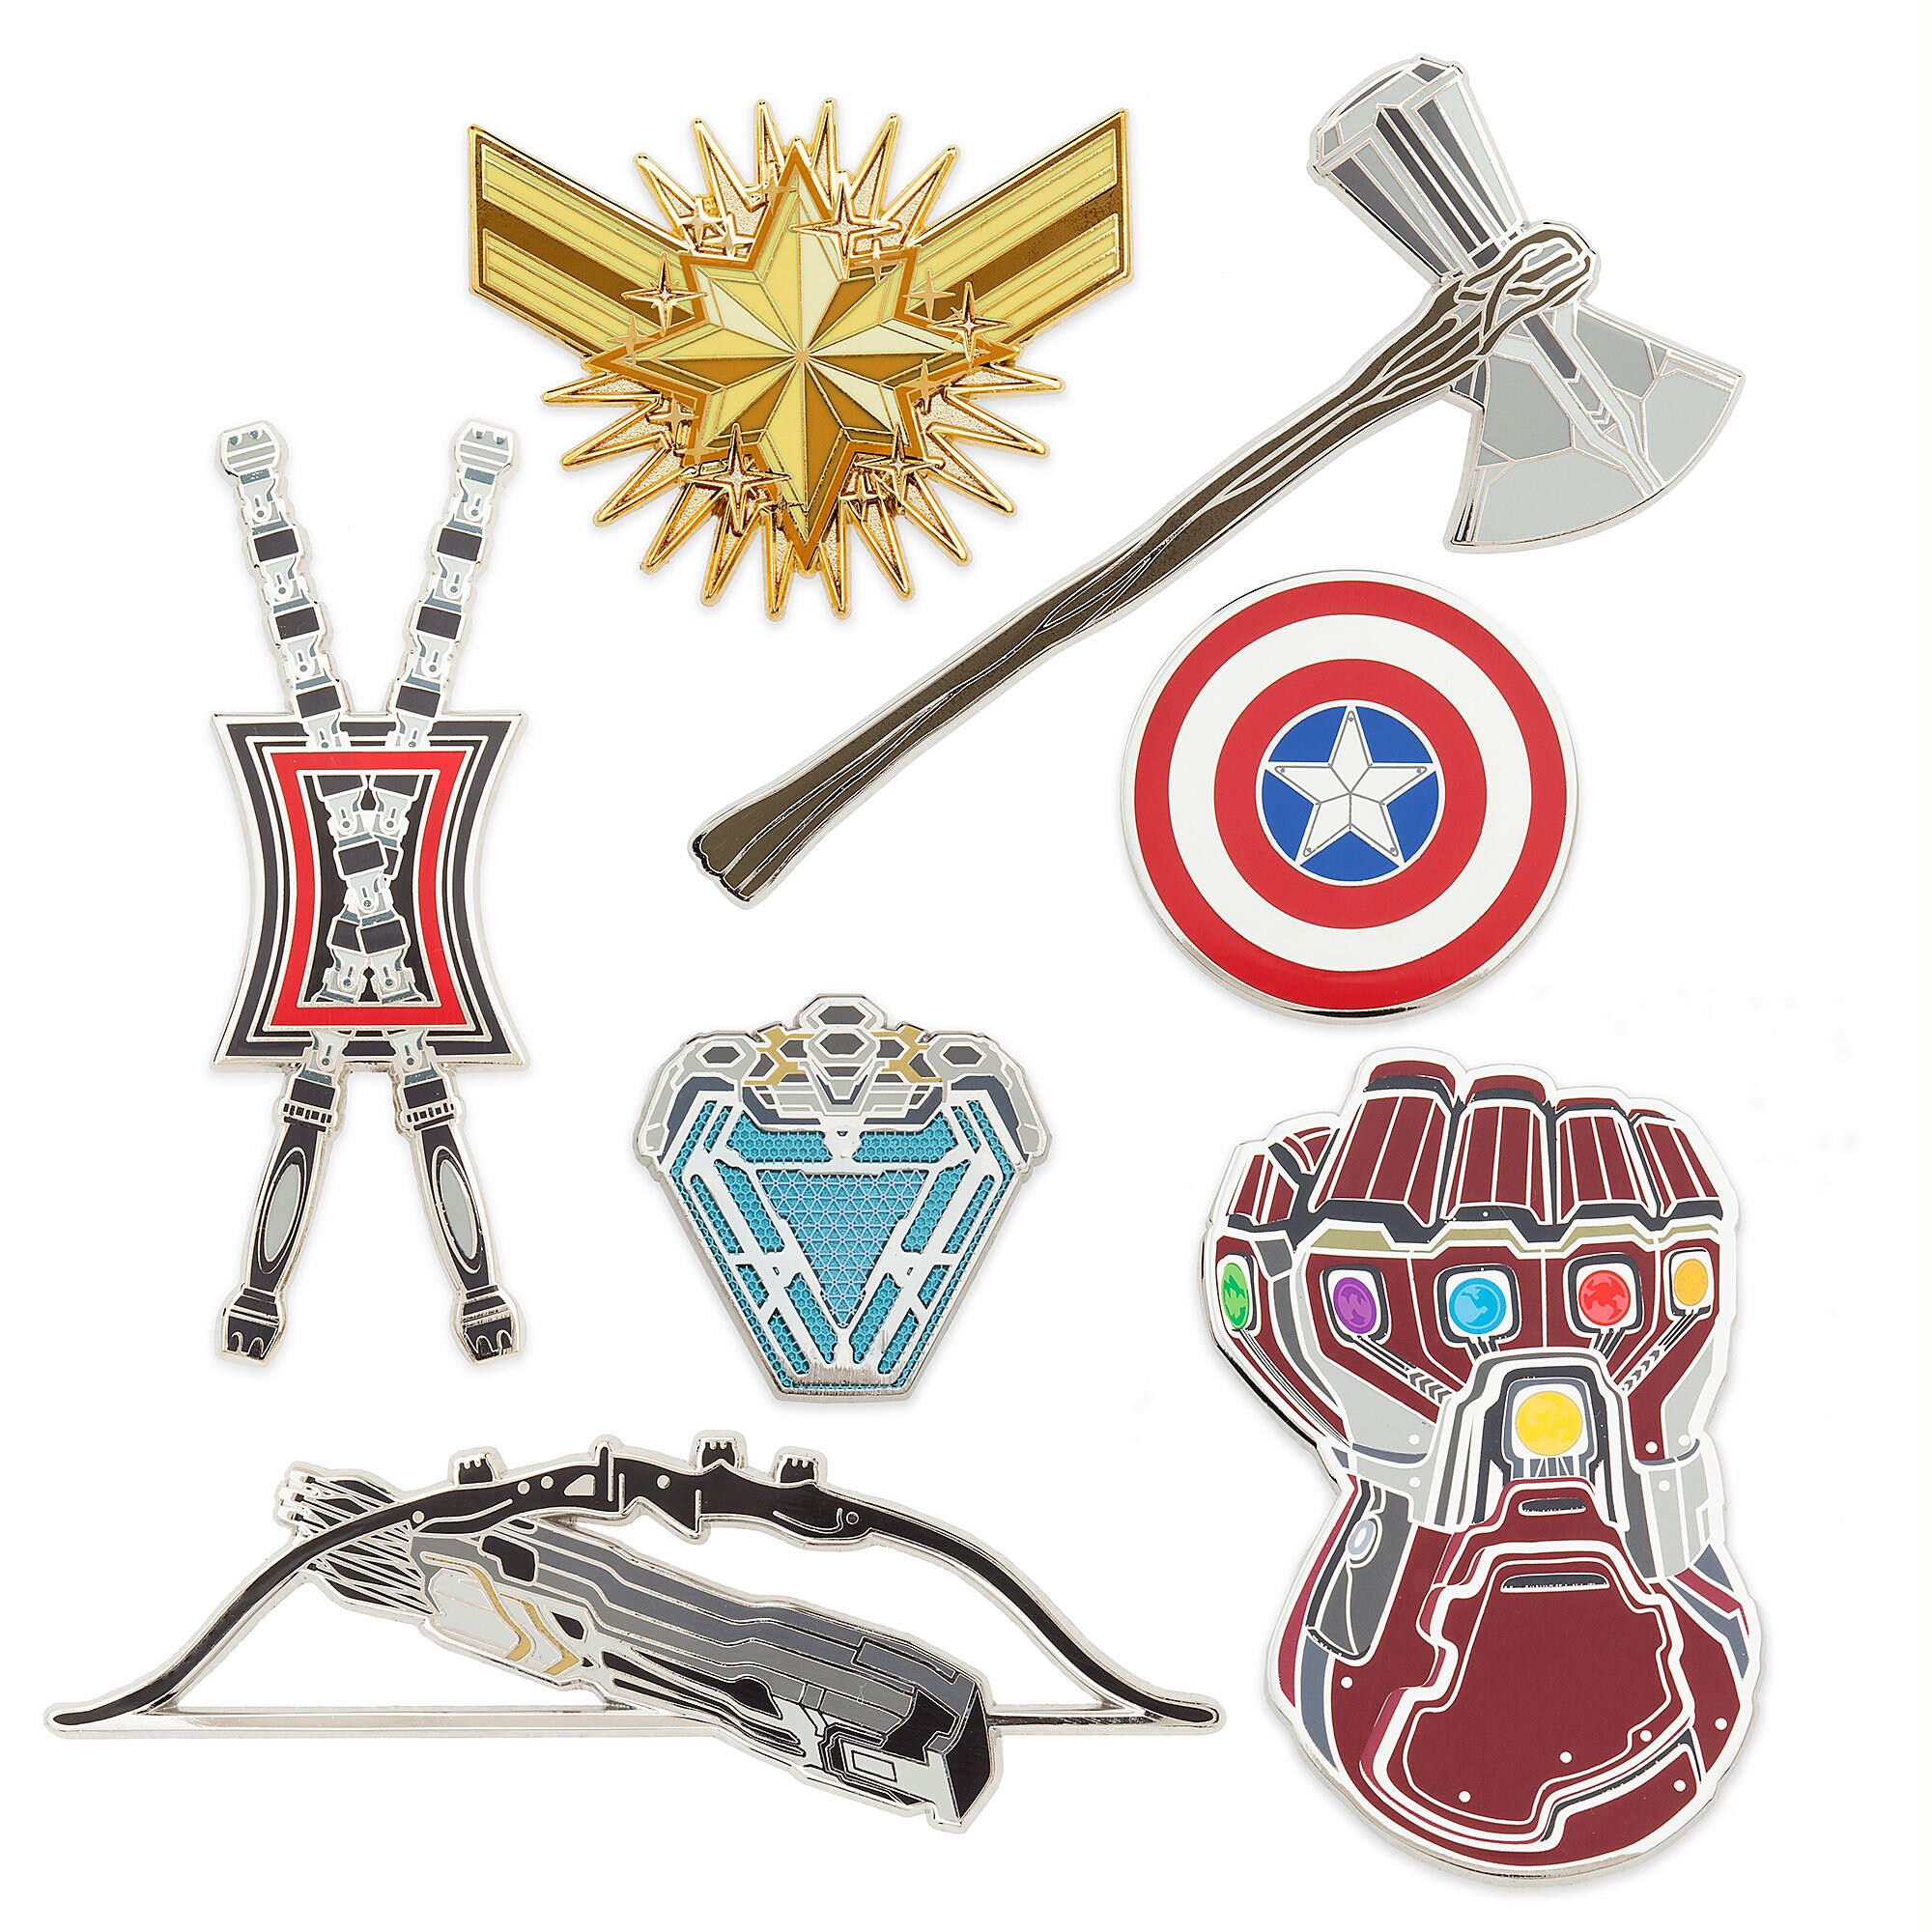 Marvel's Avengers: Endgame Pin Set - Limited Edition